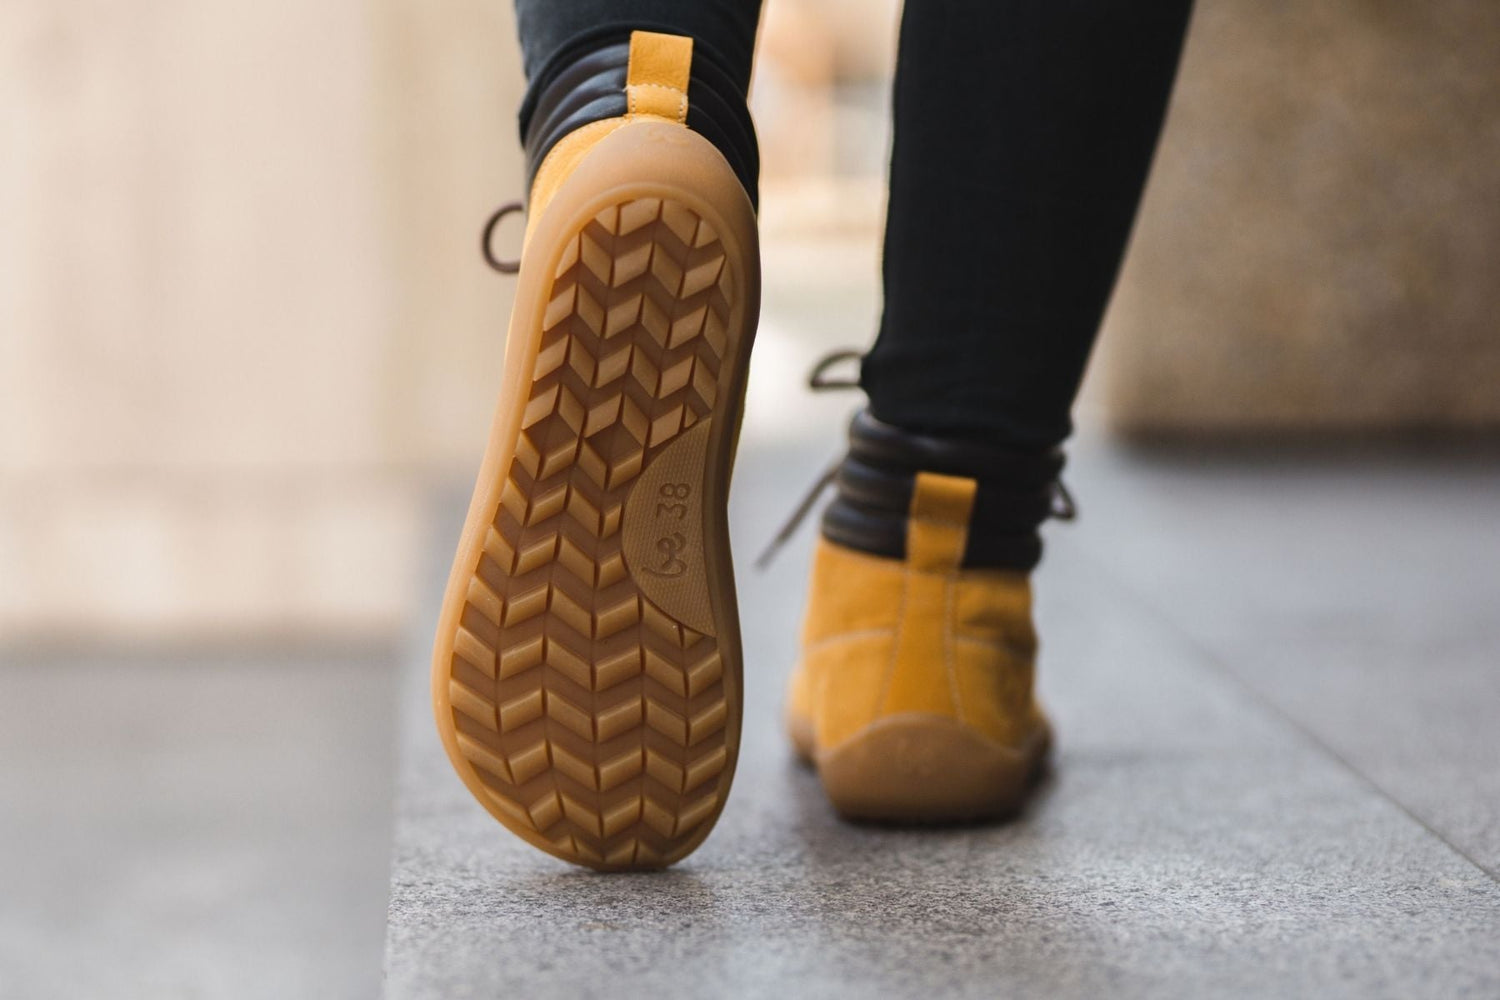 Barefoot Boots Be Lenka Nevada - Mustard-Be Lenka-Cacles Barefoot